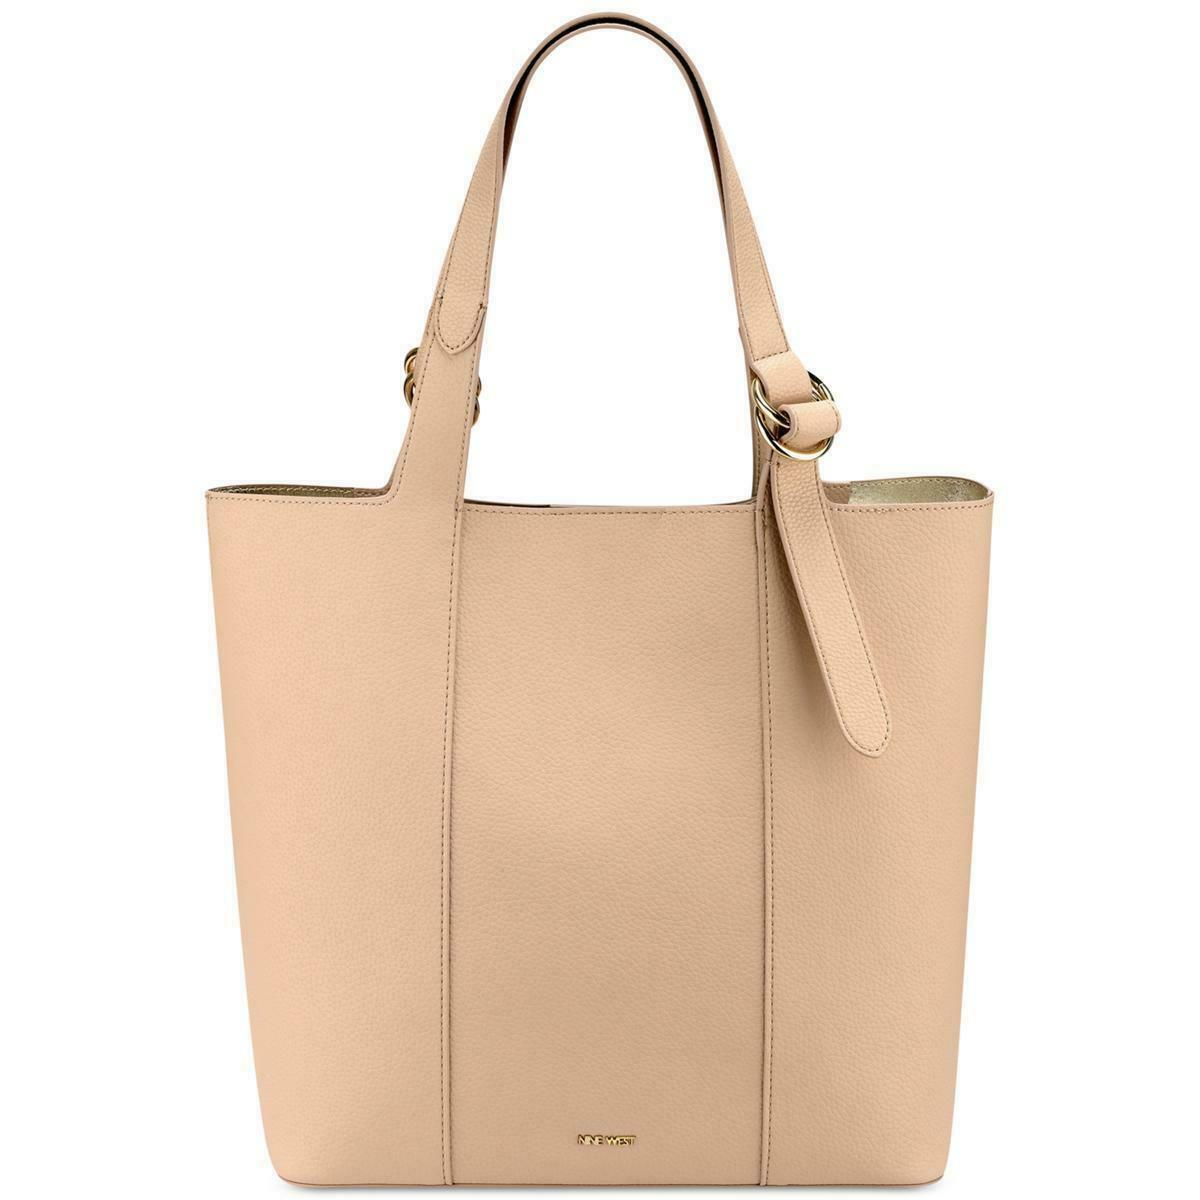 Nine West Belecia Beige Tote Handbag with Purse MSRP $89.00 - Women's ...